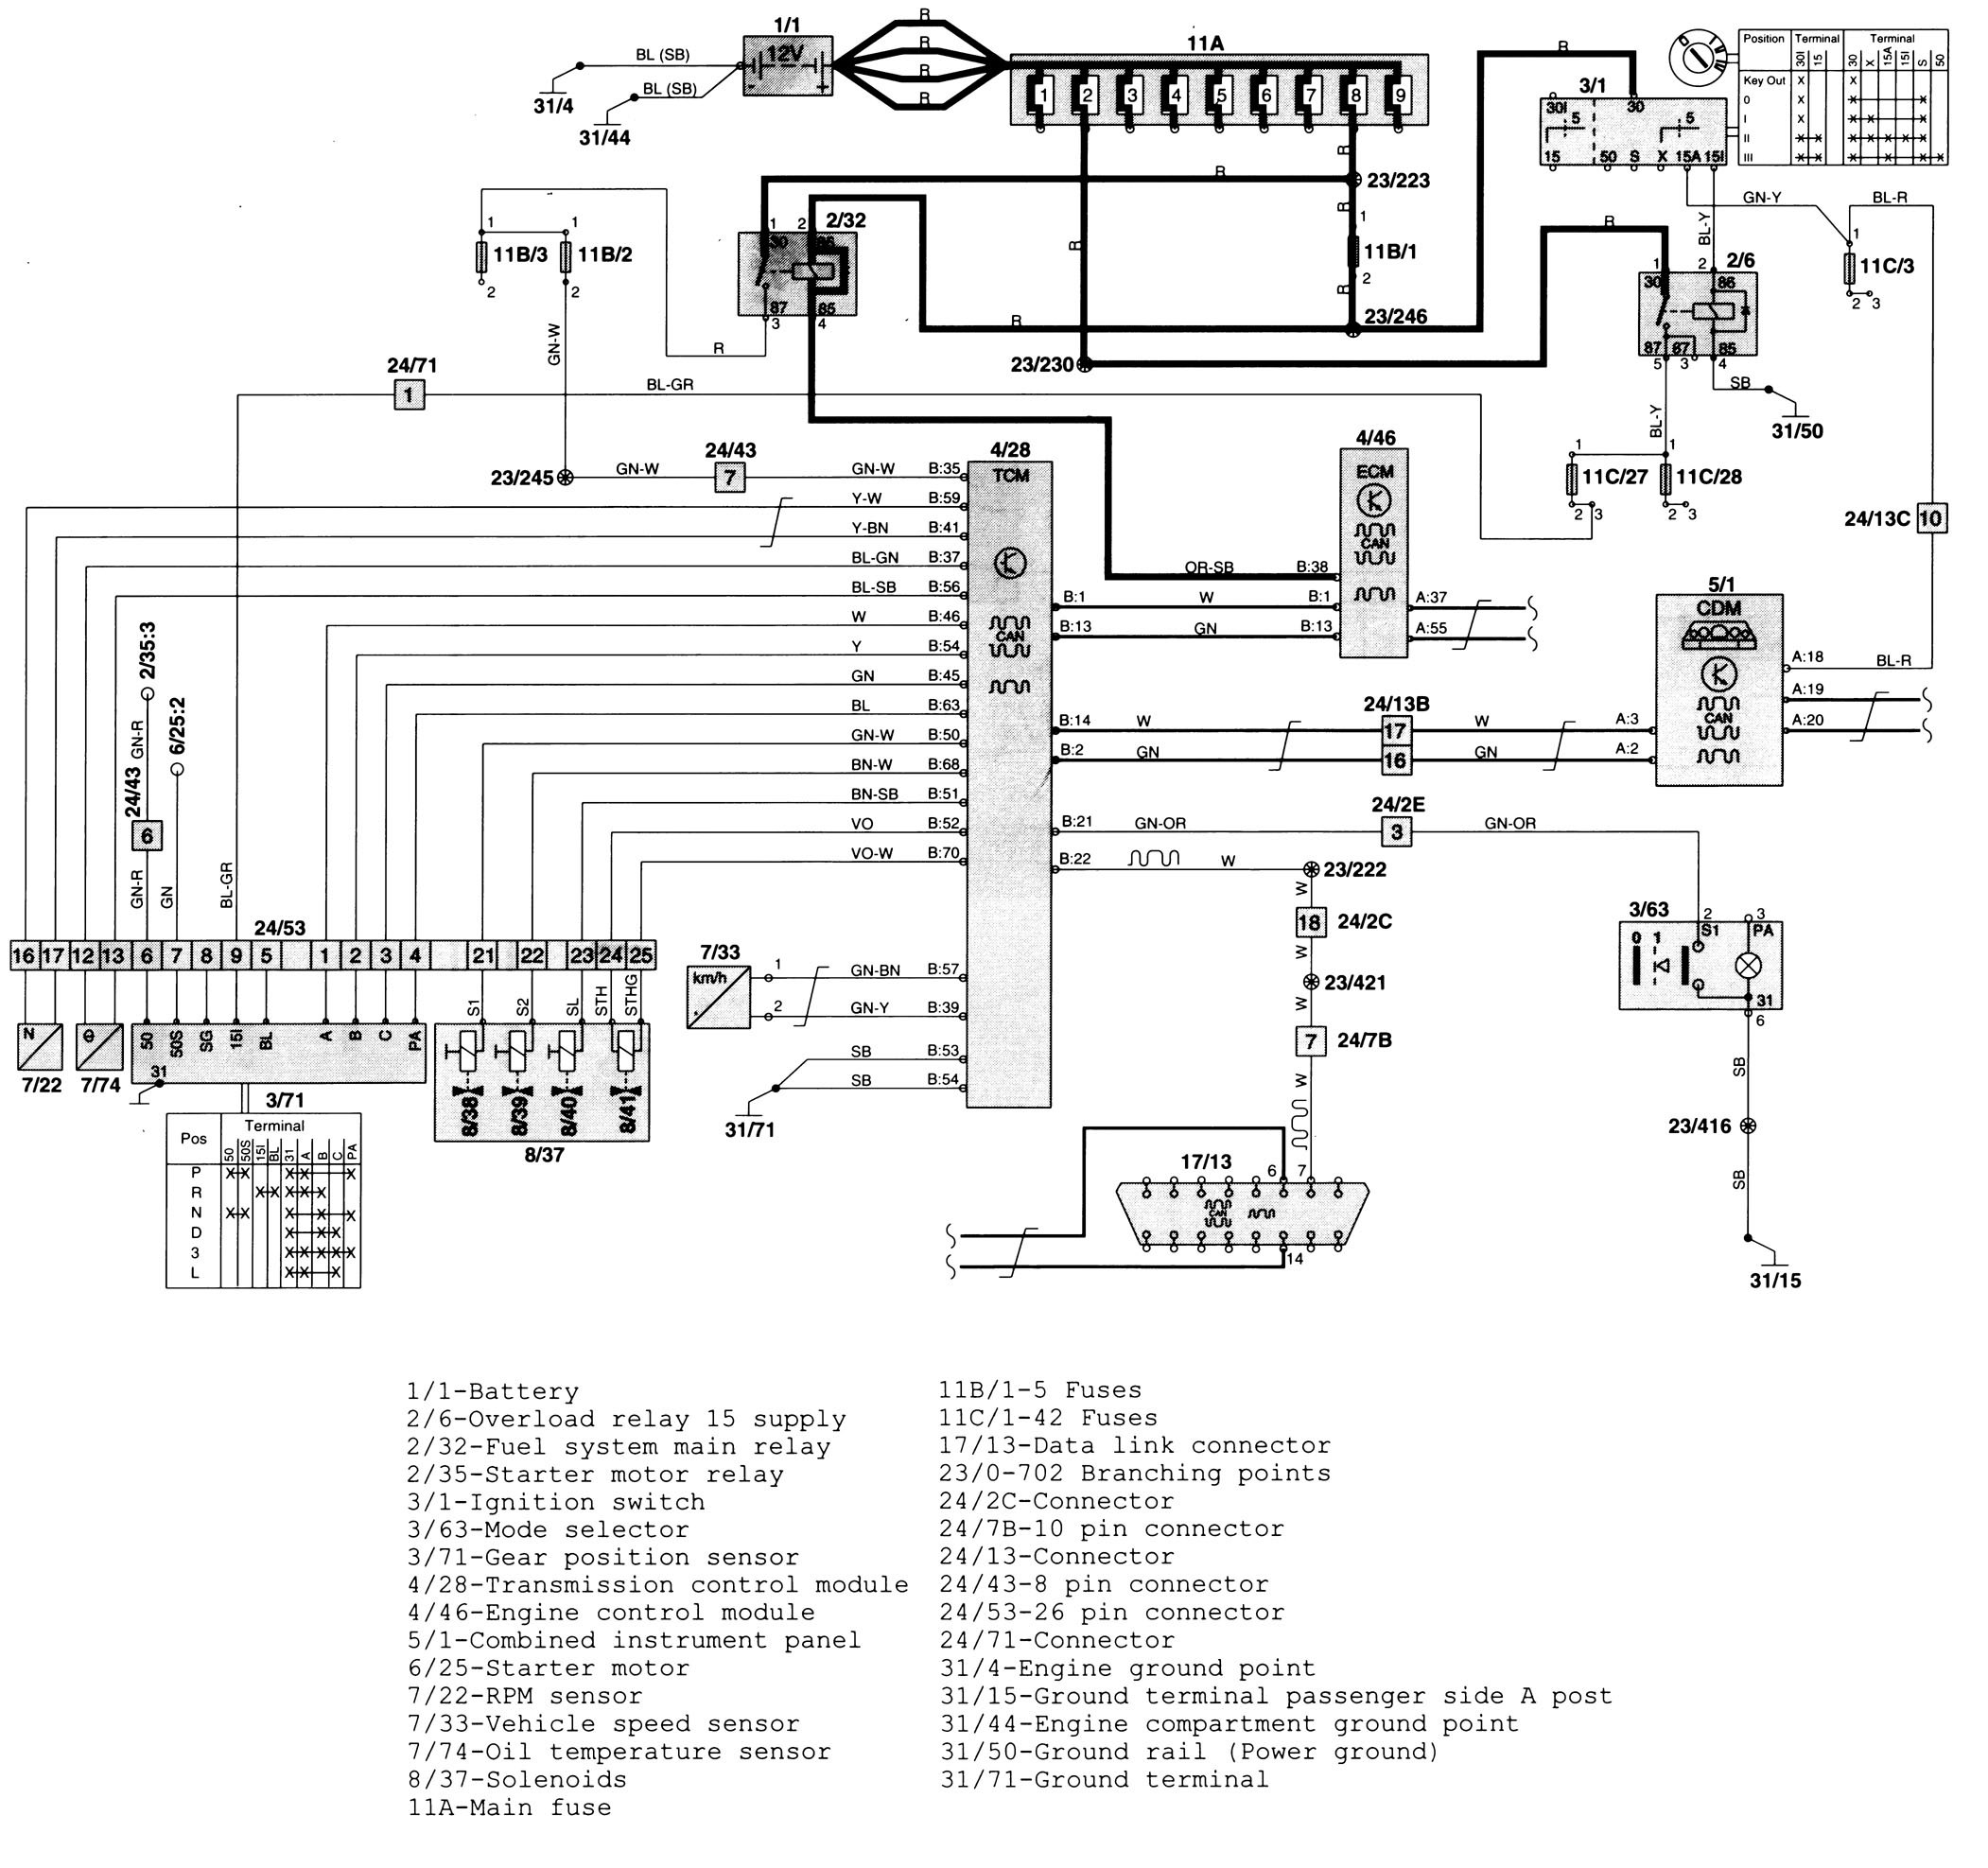 1998 S90 Volvo Fuel System Wiring Diagram